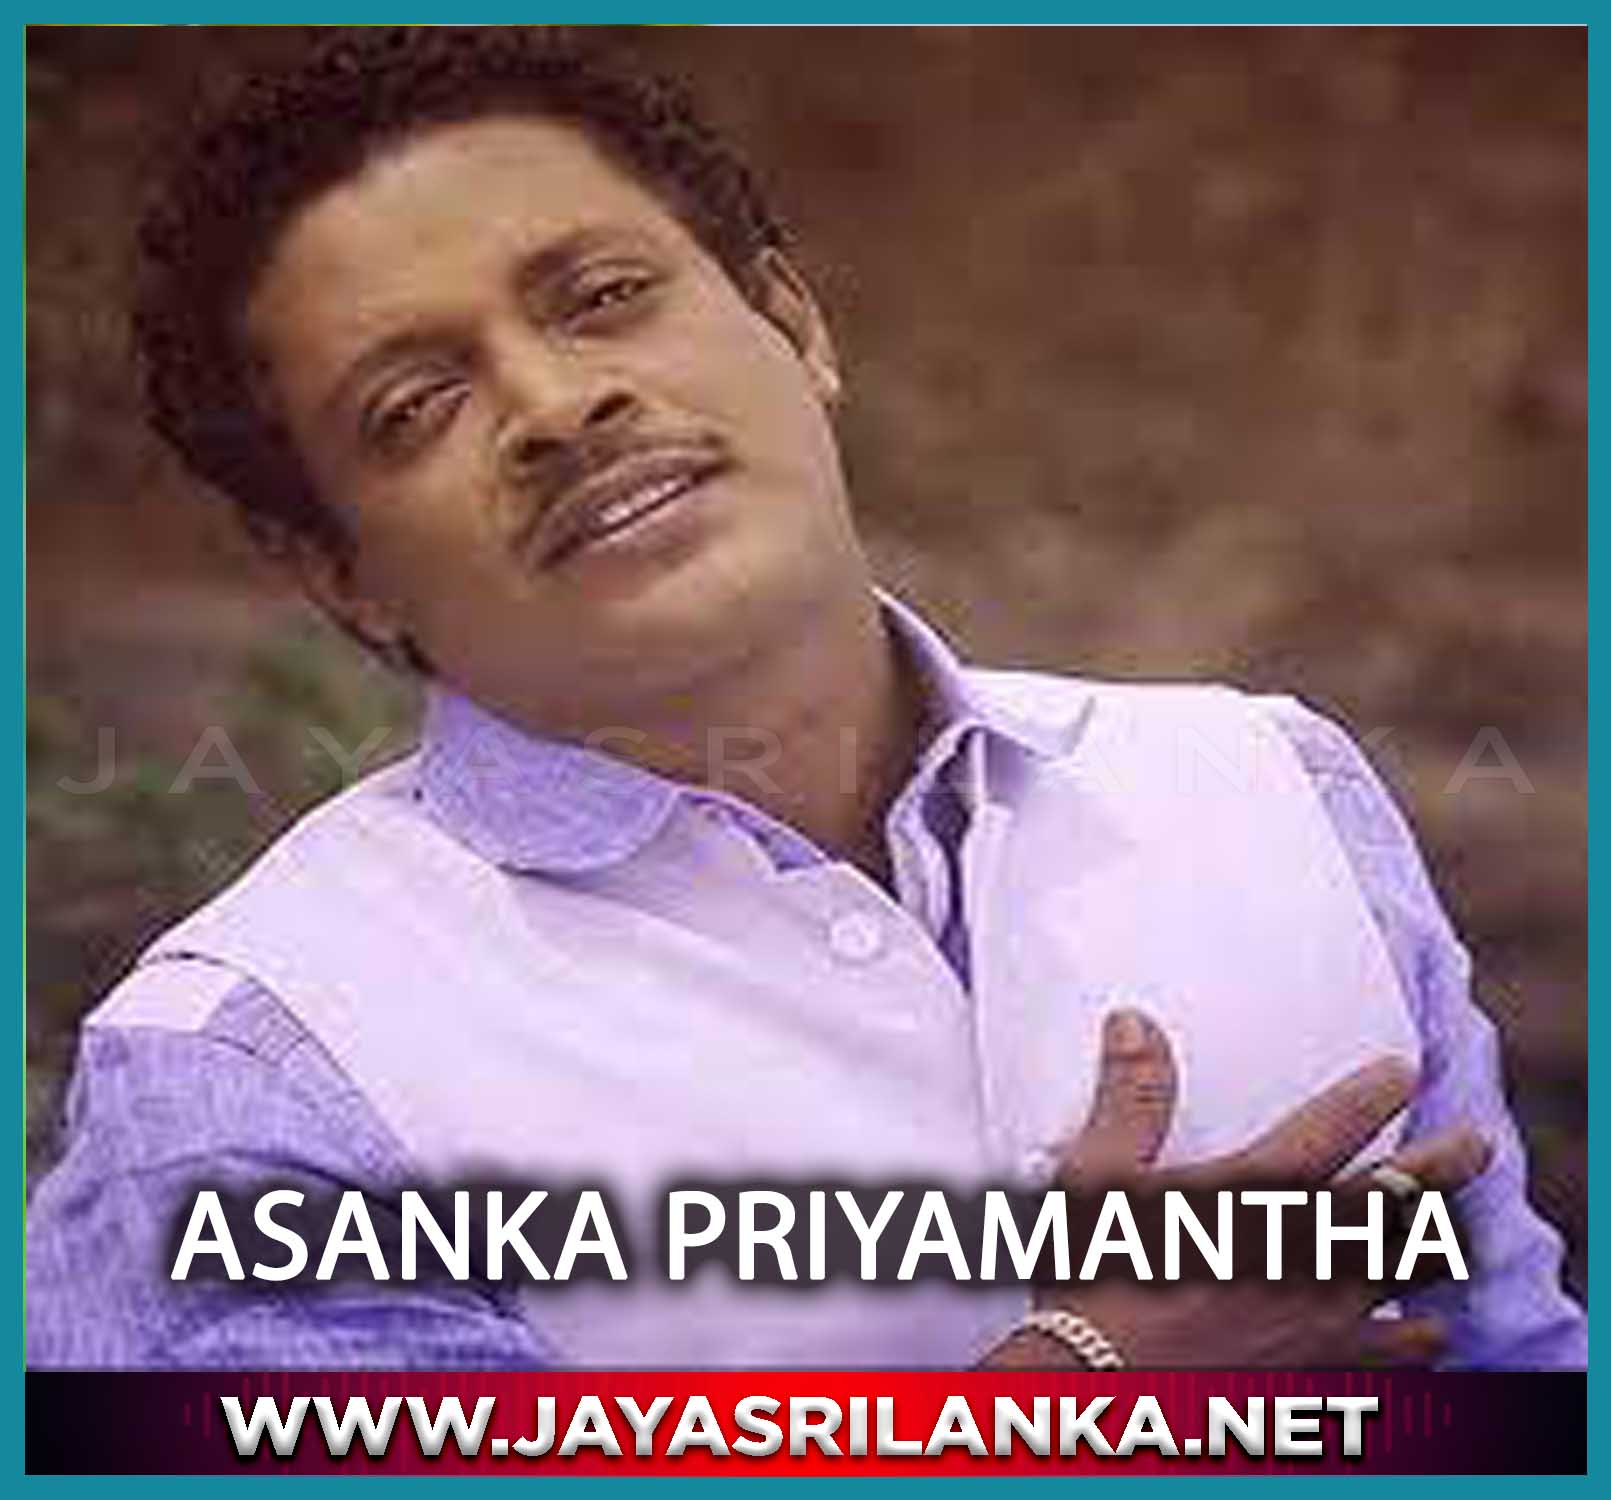 Wahinnata Wagei - Asanka Priyamantha Peiris mp3 Image